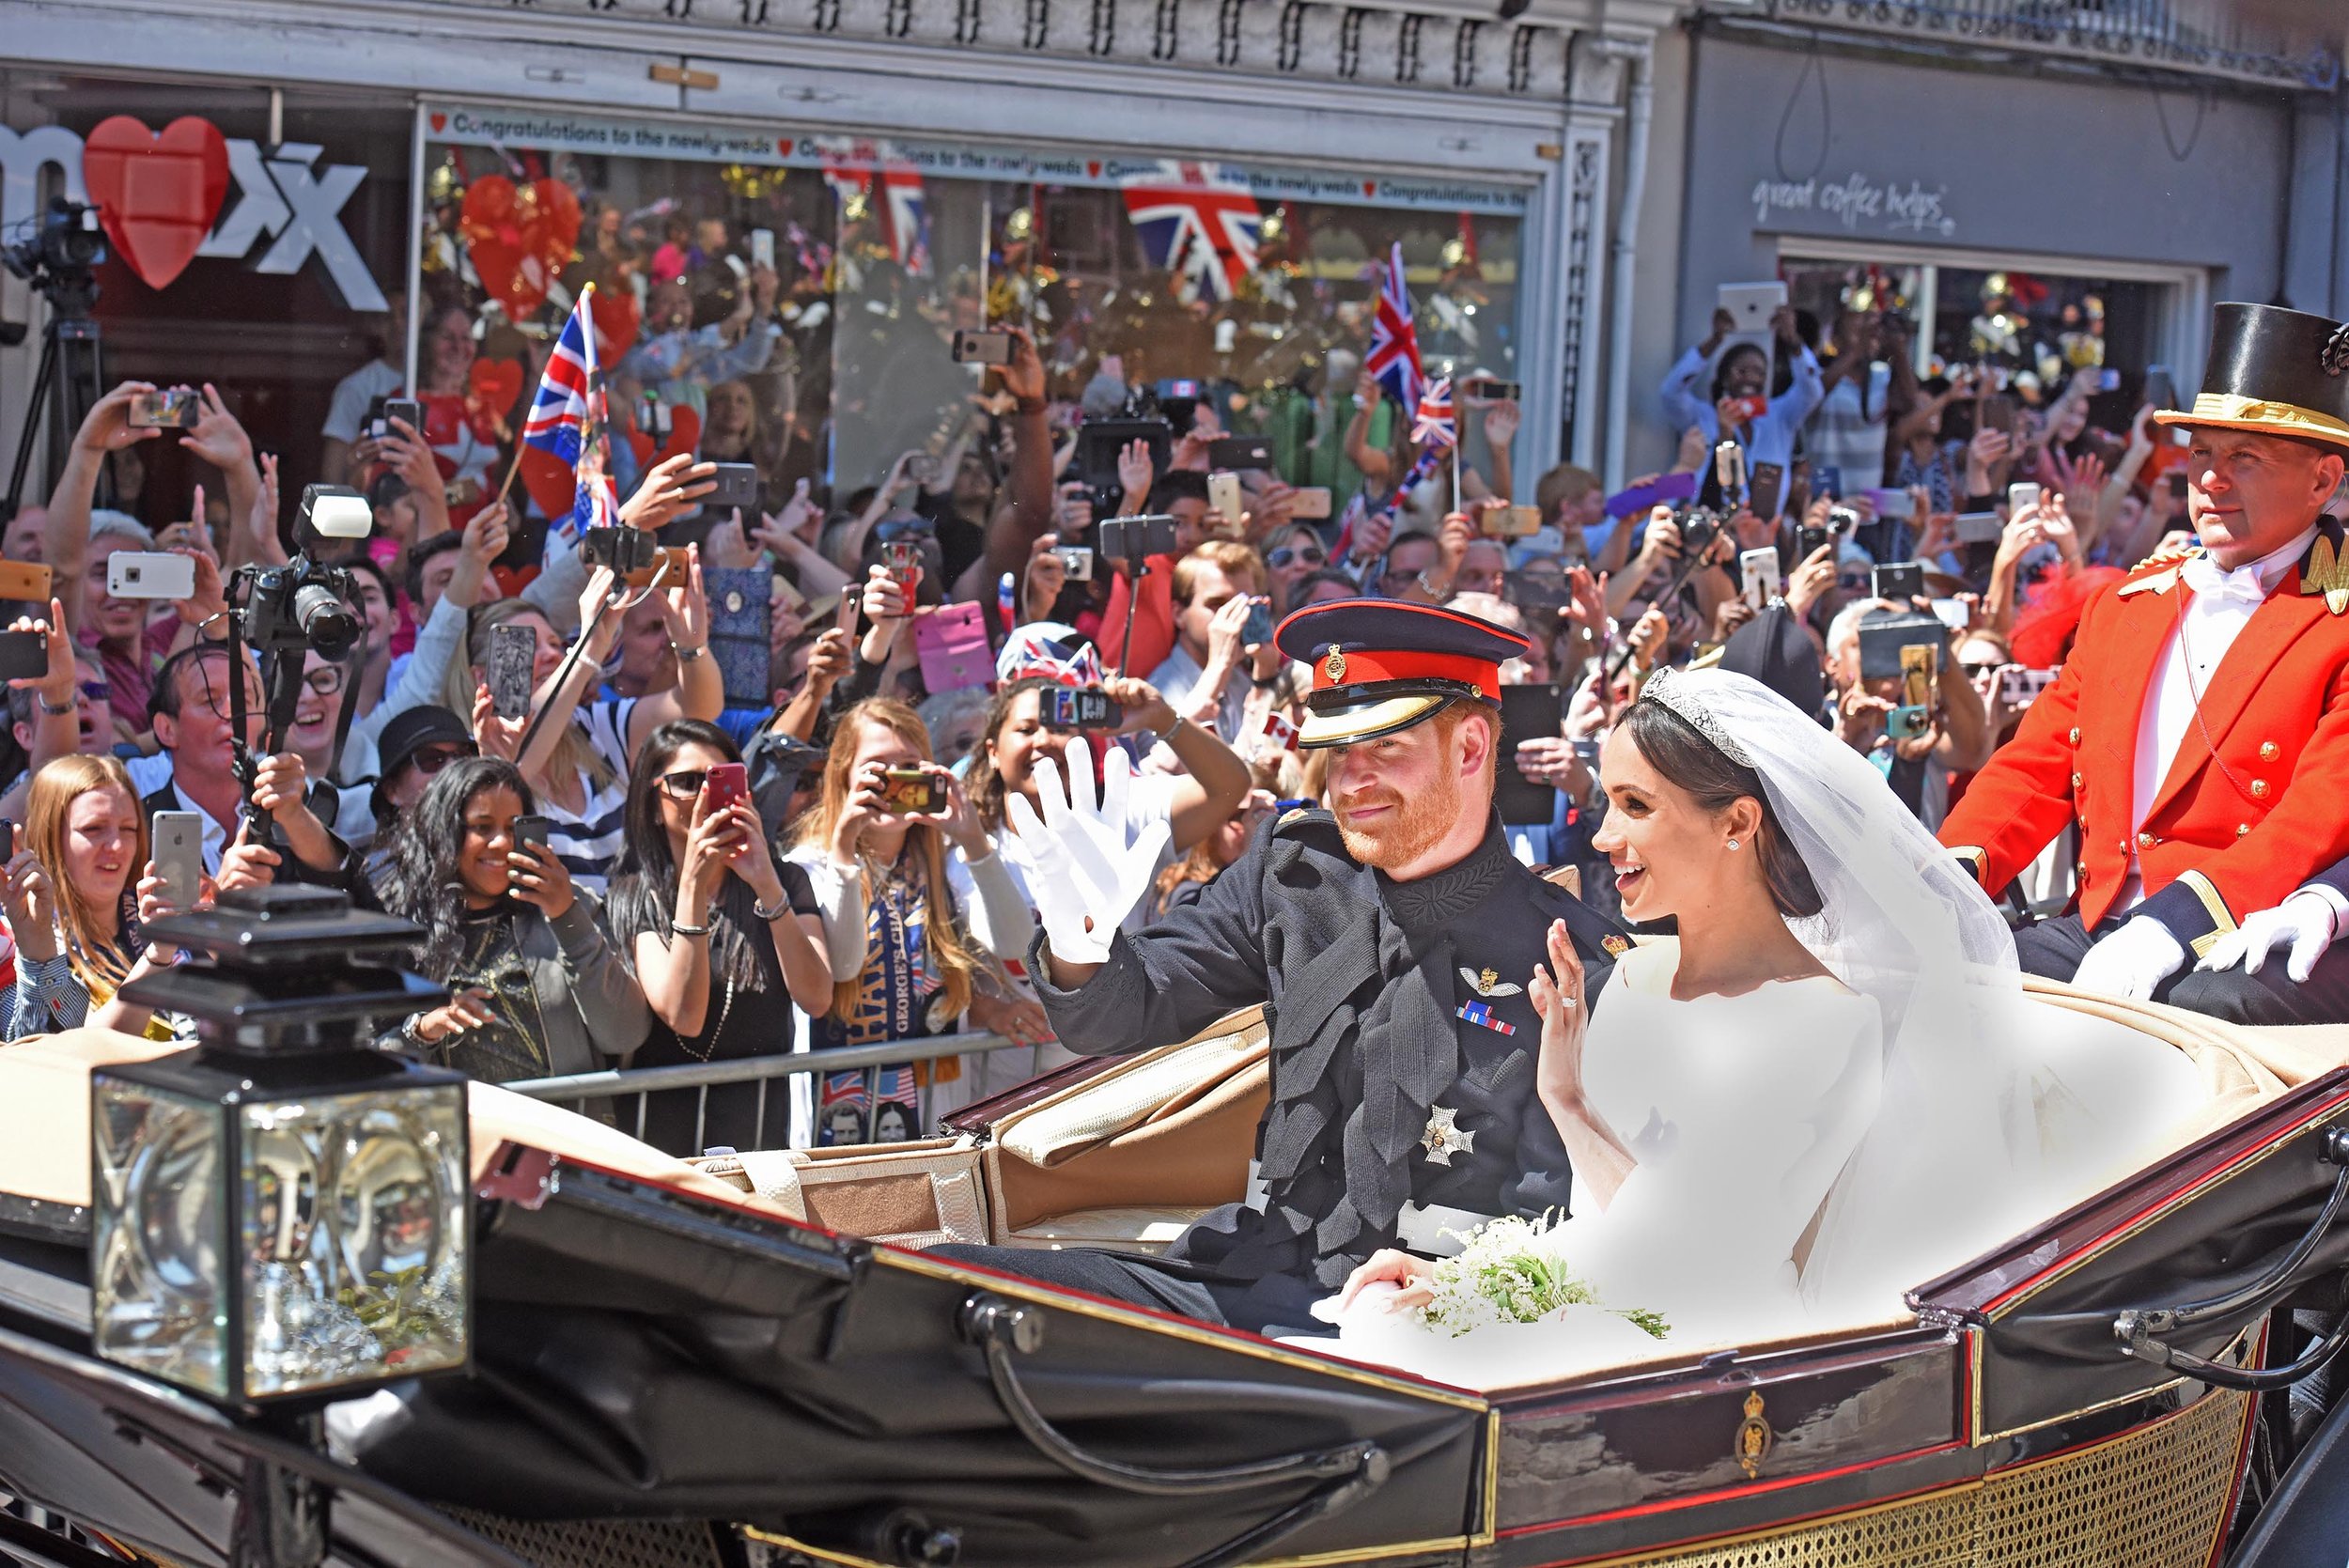 Prince Harry and Meghan Markle Wedding